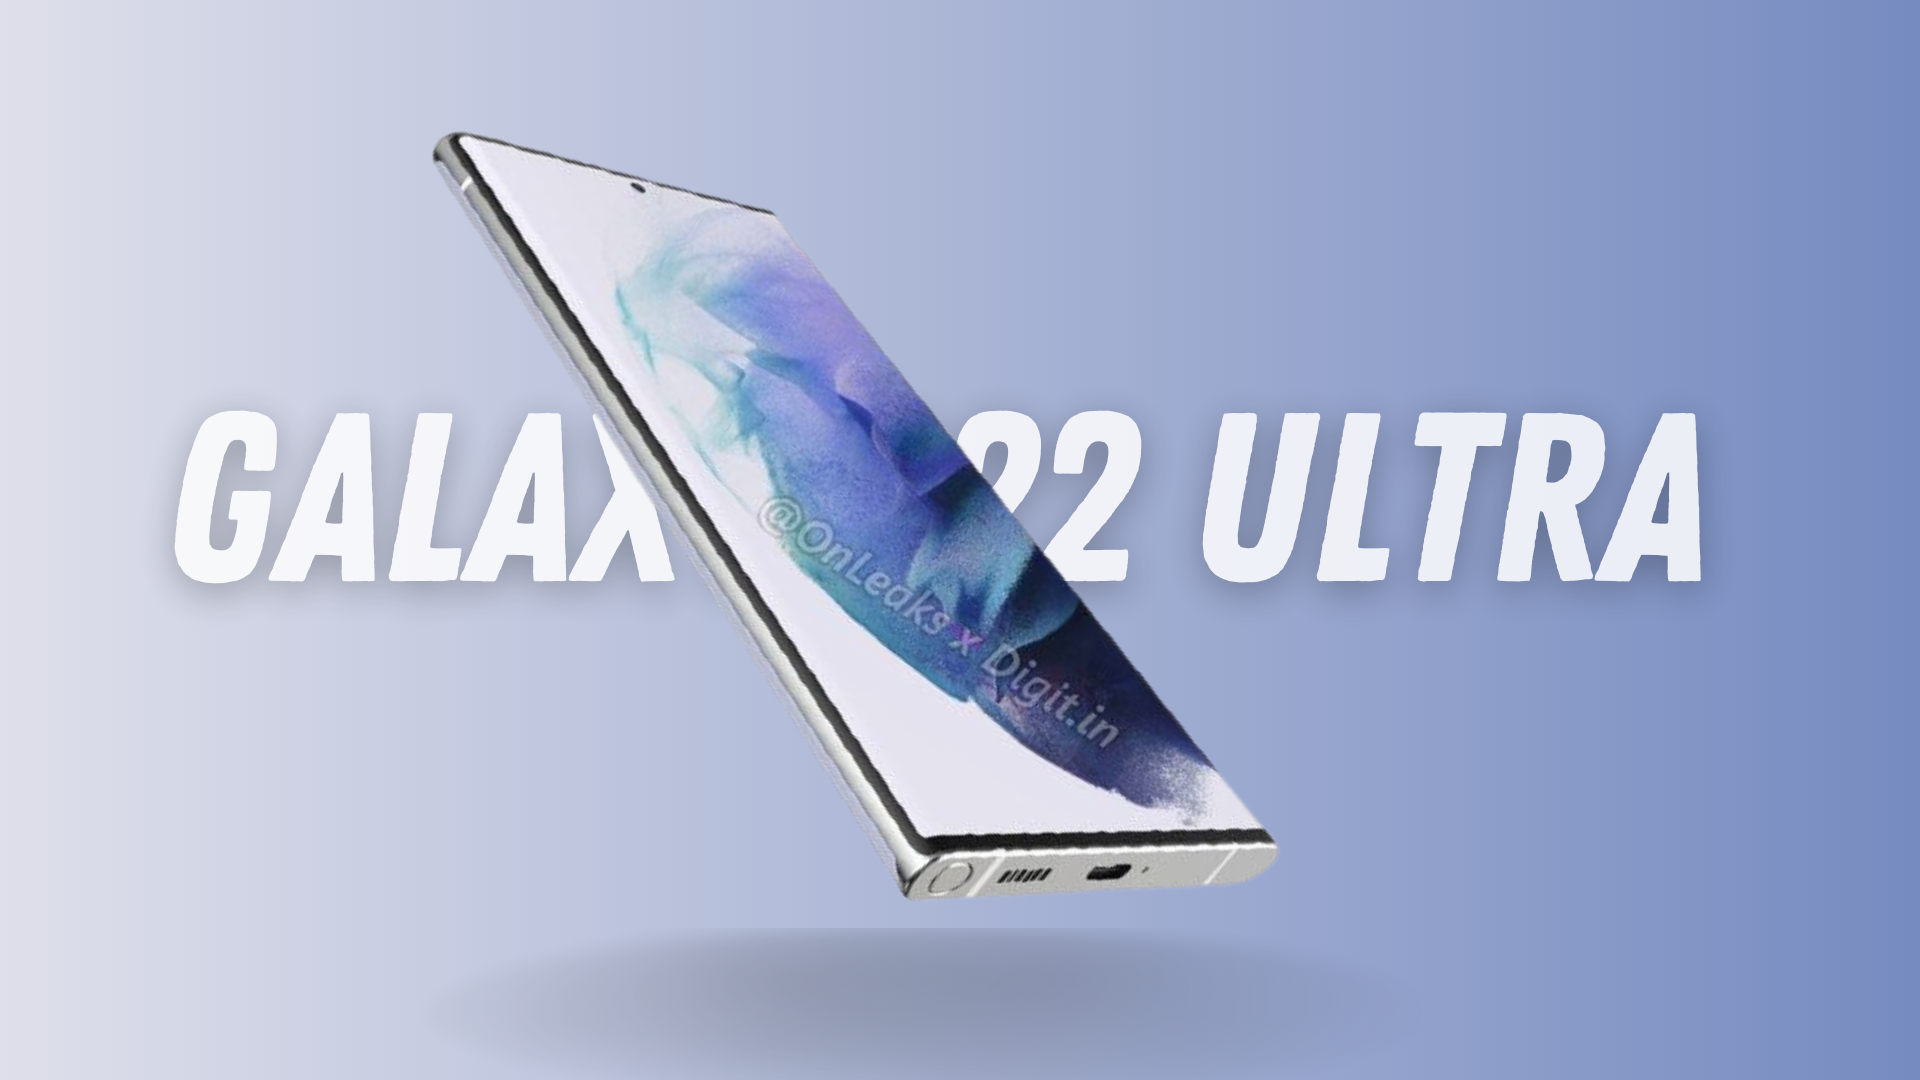 Samsung Galaxy S22 Ultra renders leaks online